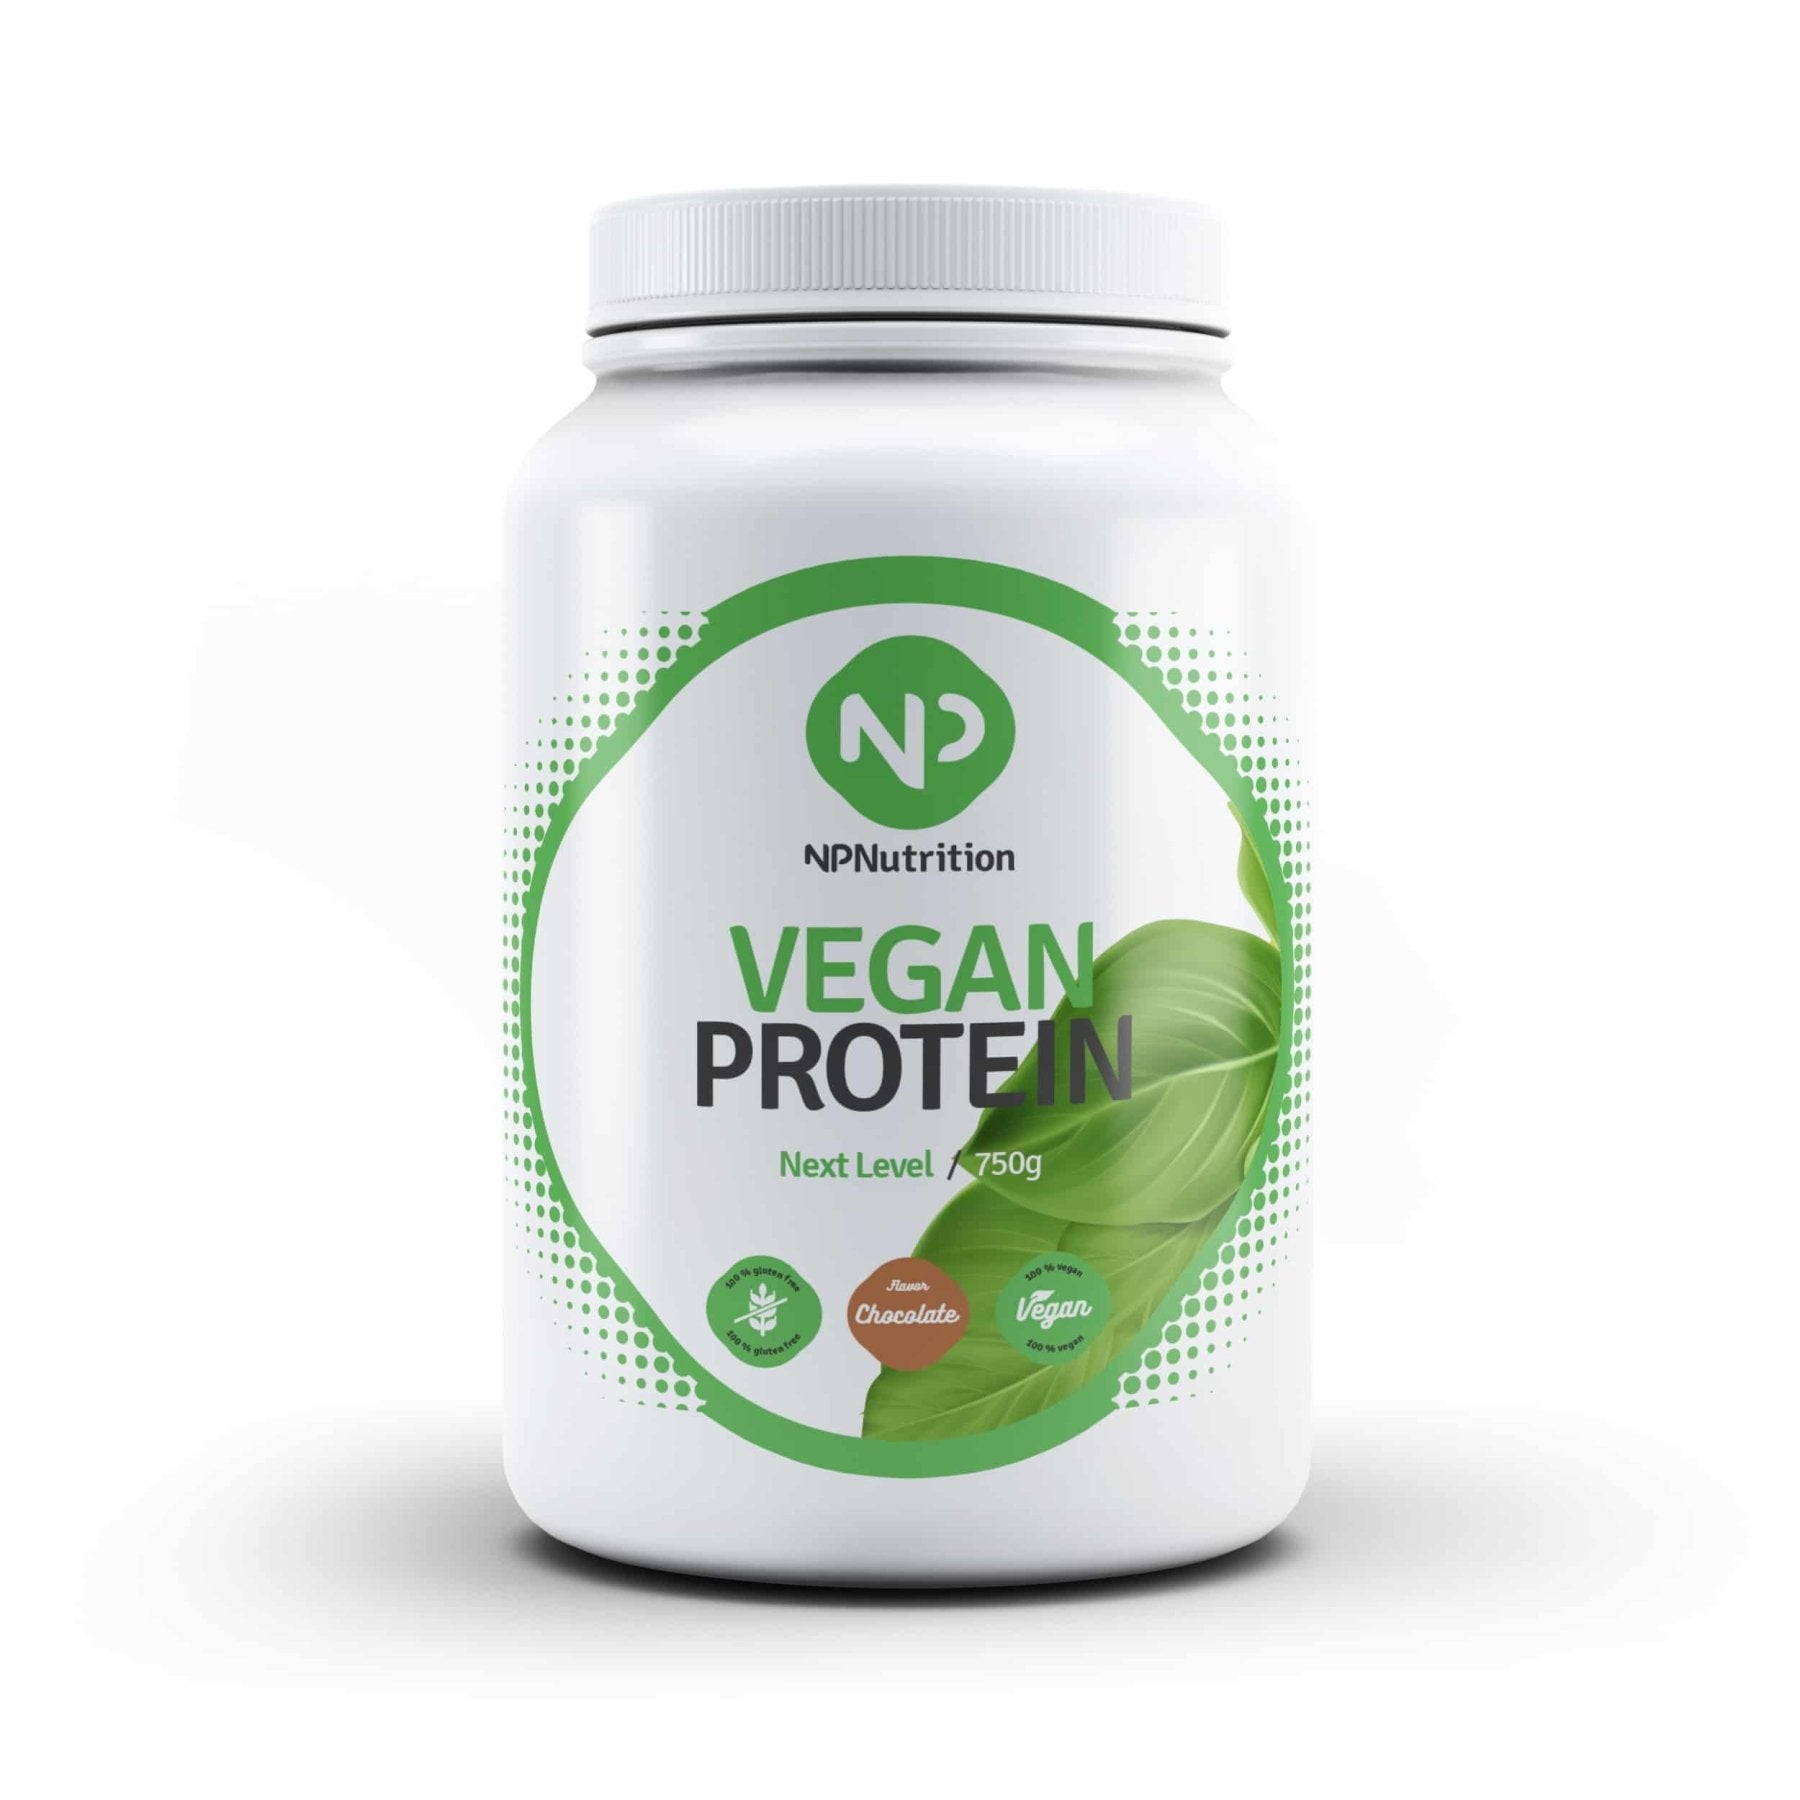 NP Nutrition Vegan Protein 750g - getboost3d